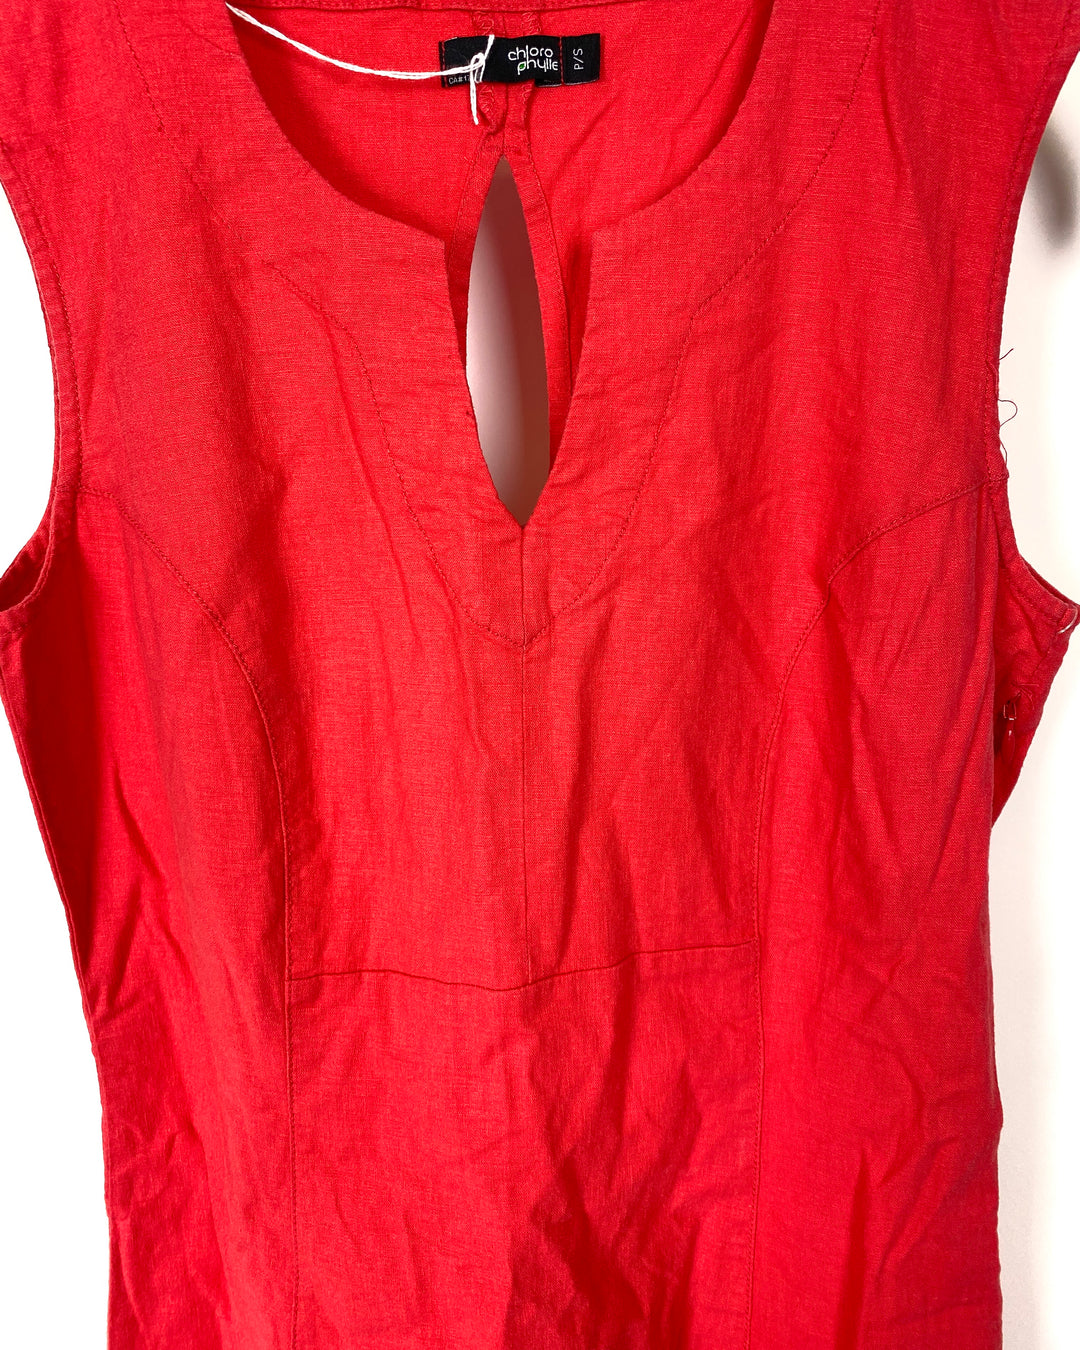 Red Sleeveless Dress - Small